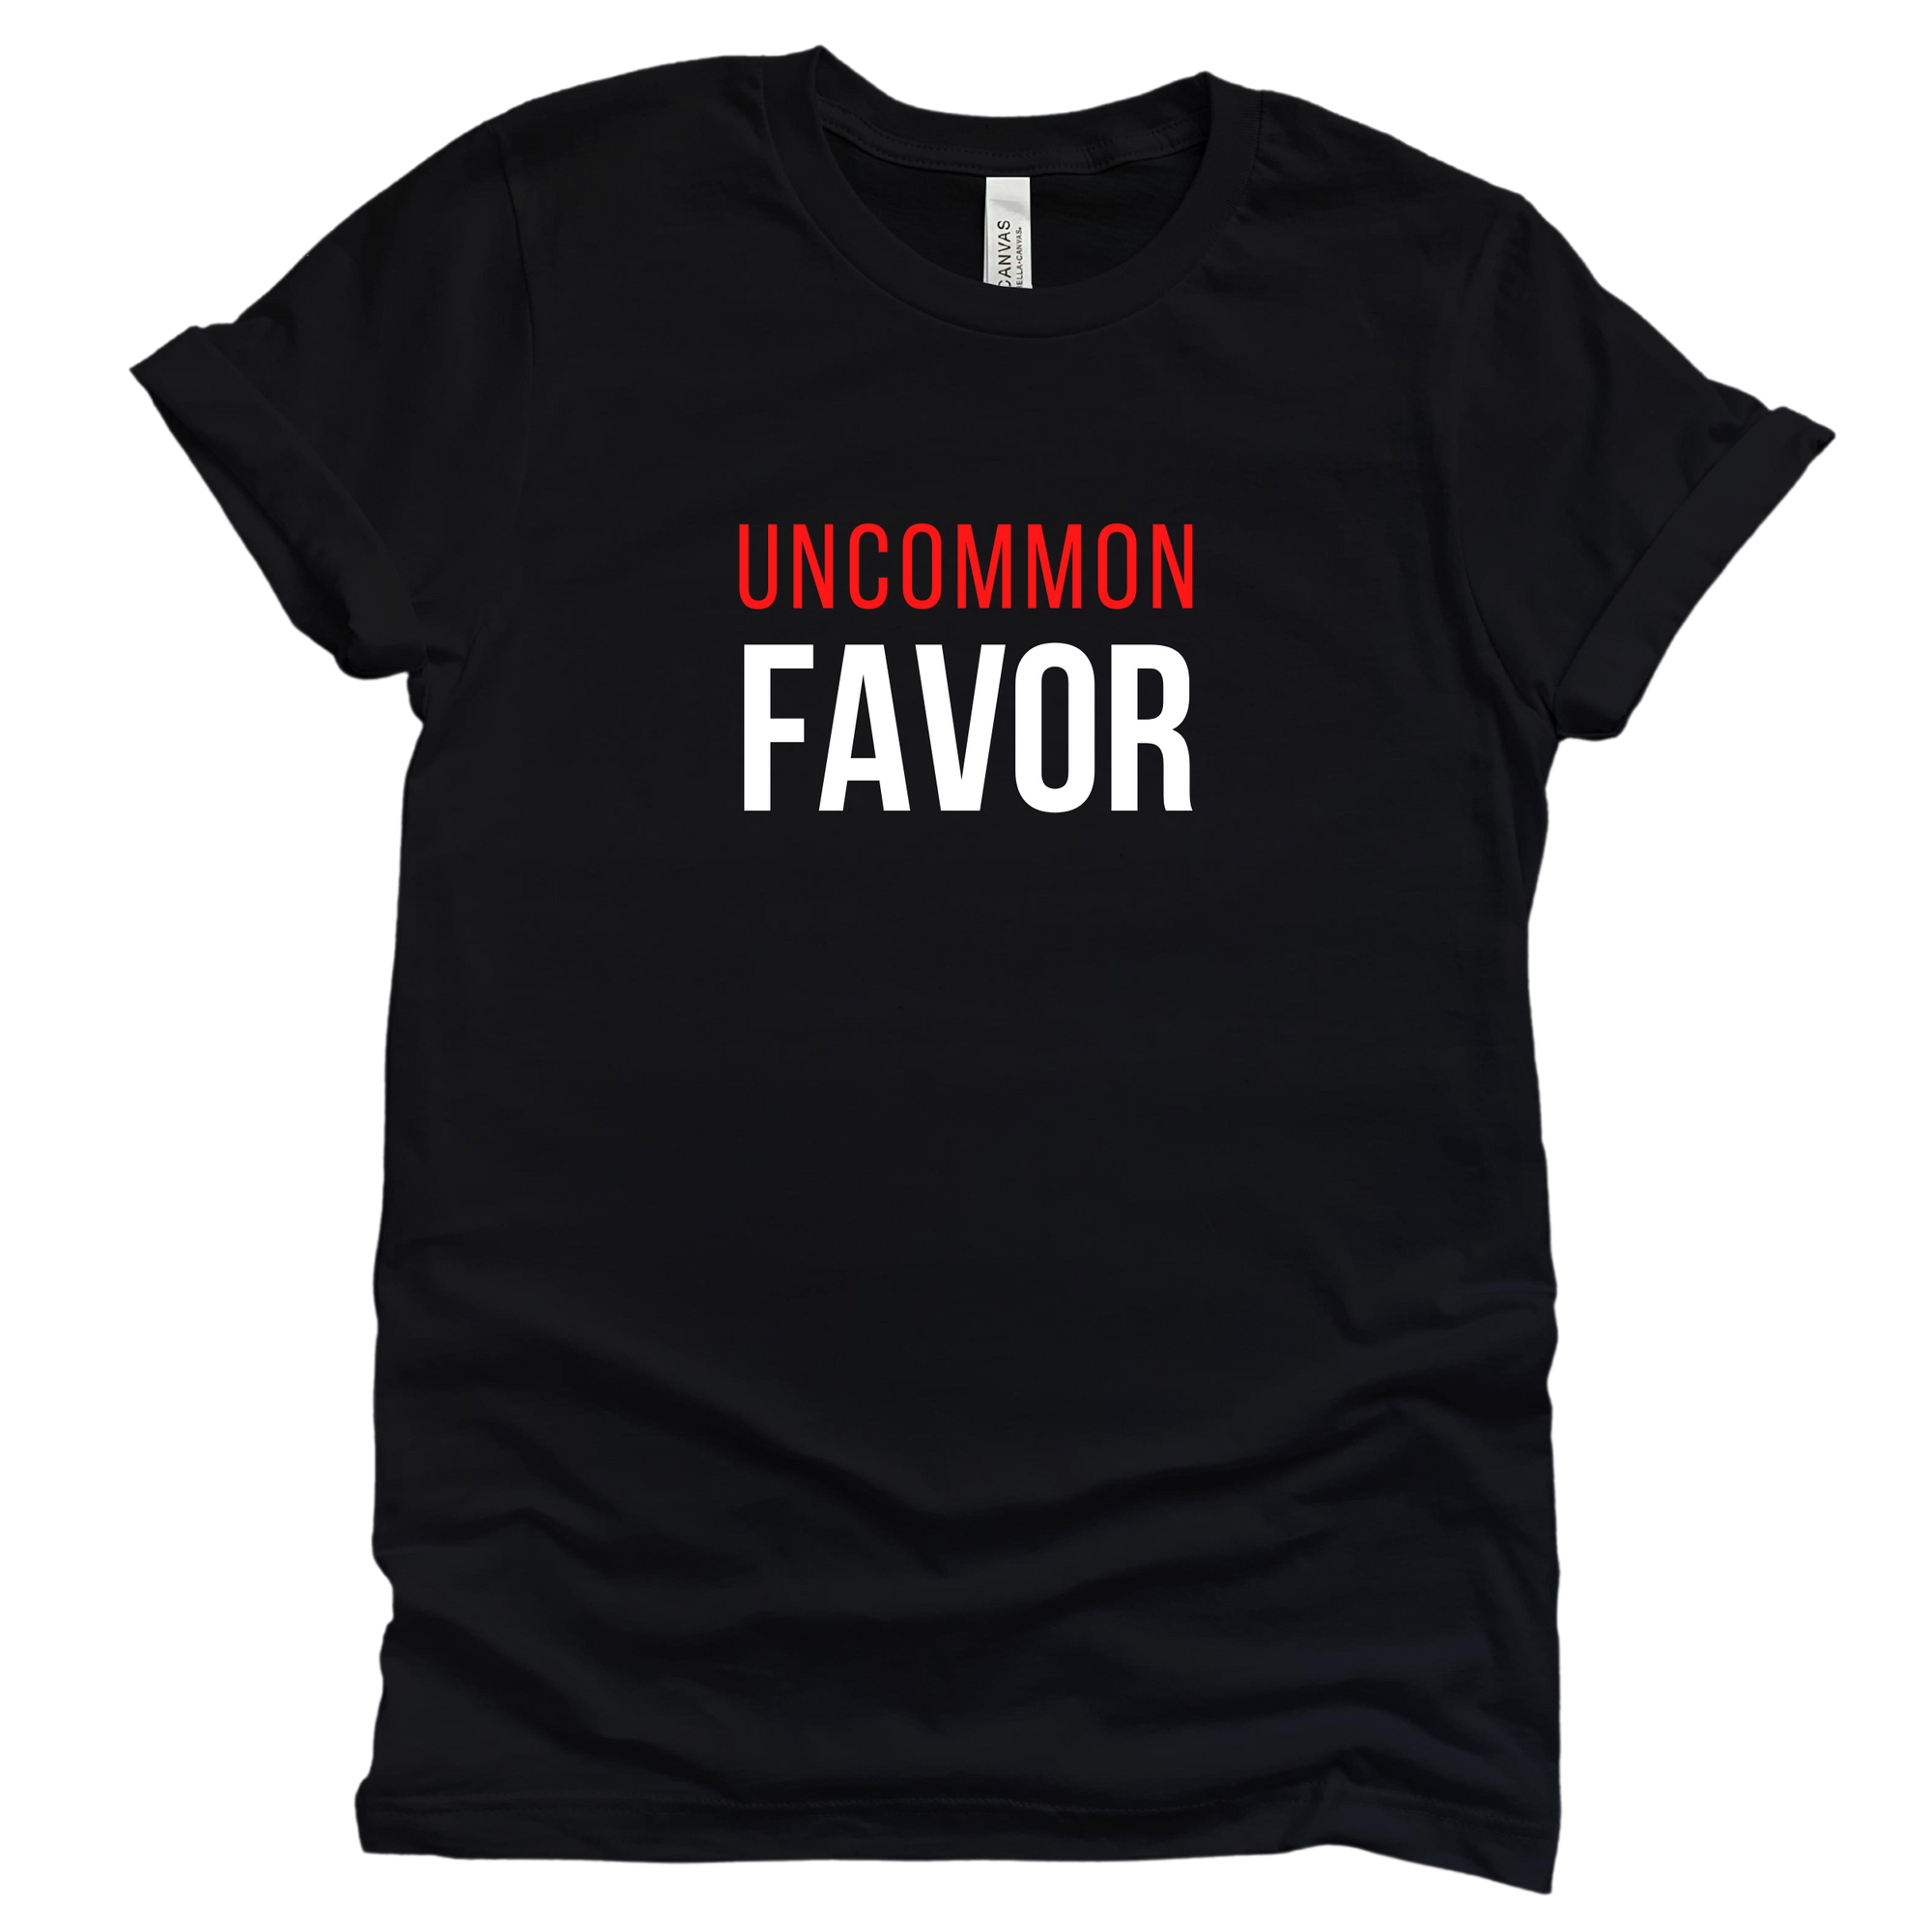 Uncommon Favor Tee